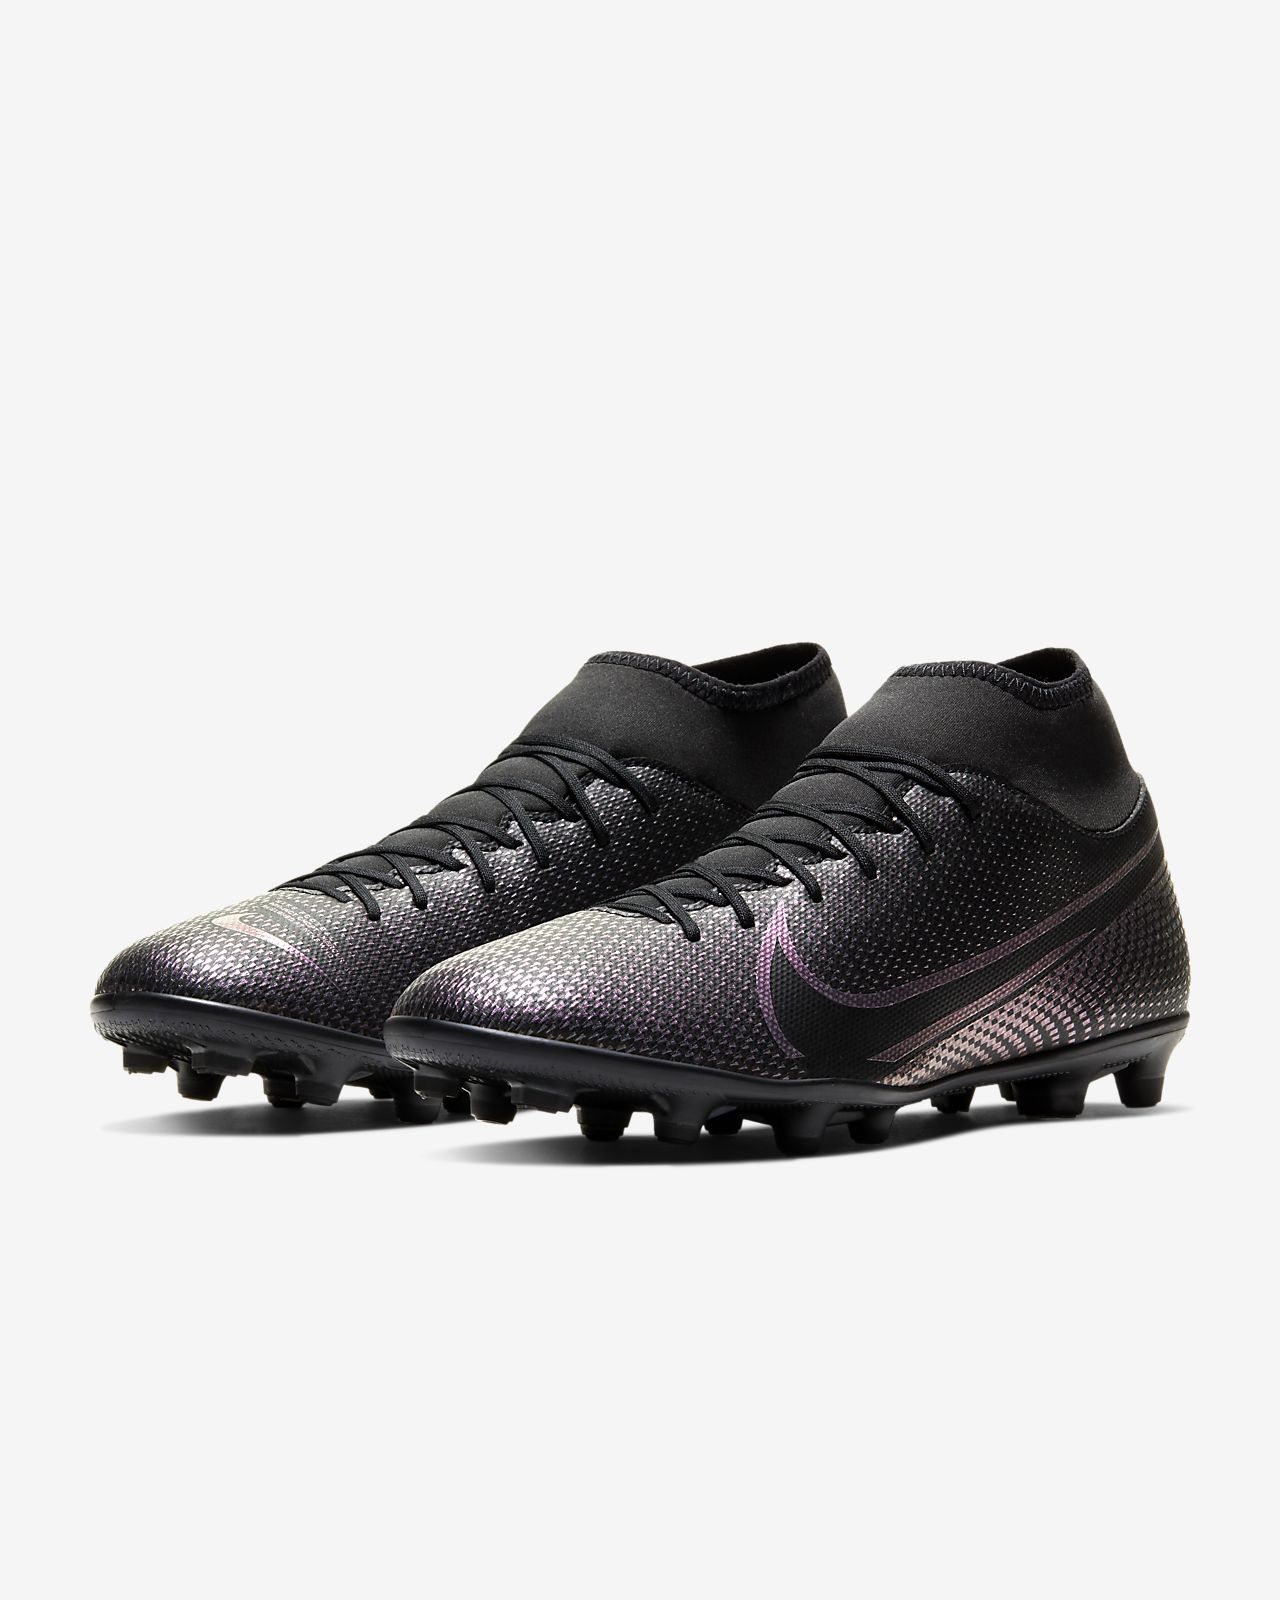 Nike Mercurial Superfly 6 Club Football Boots. Shop timão